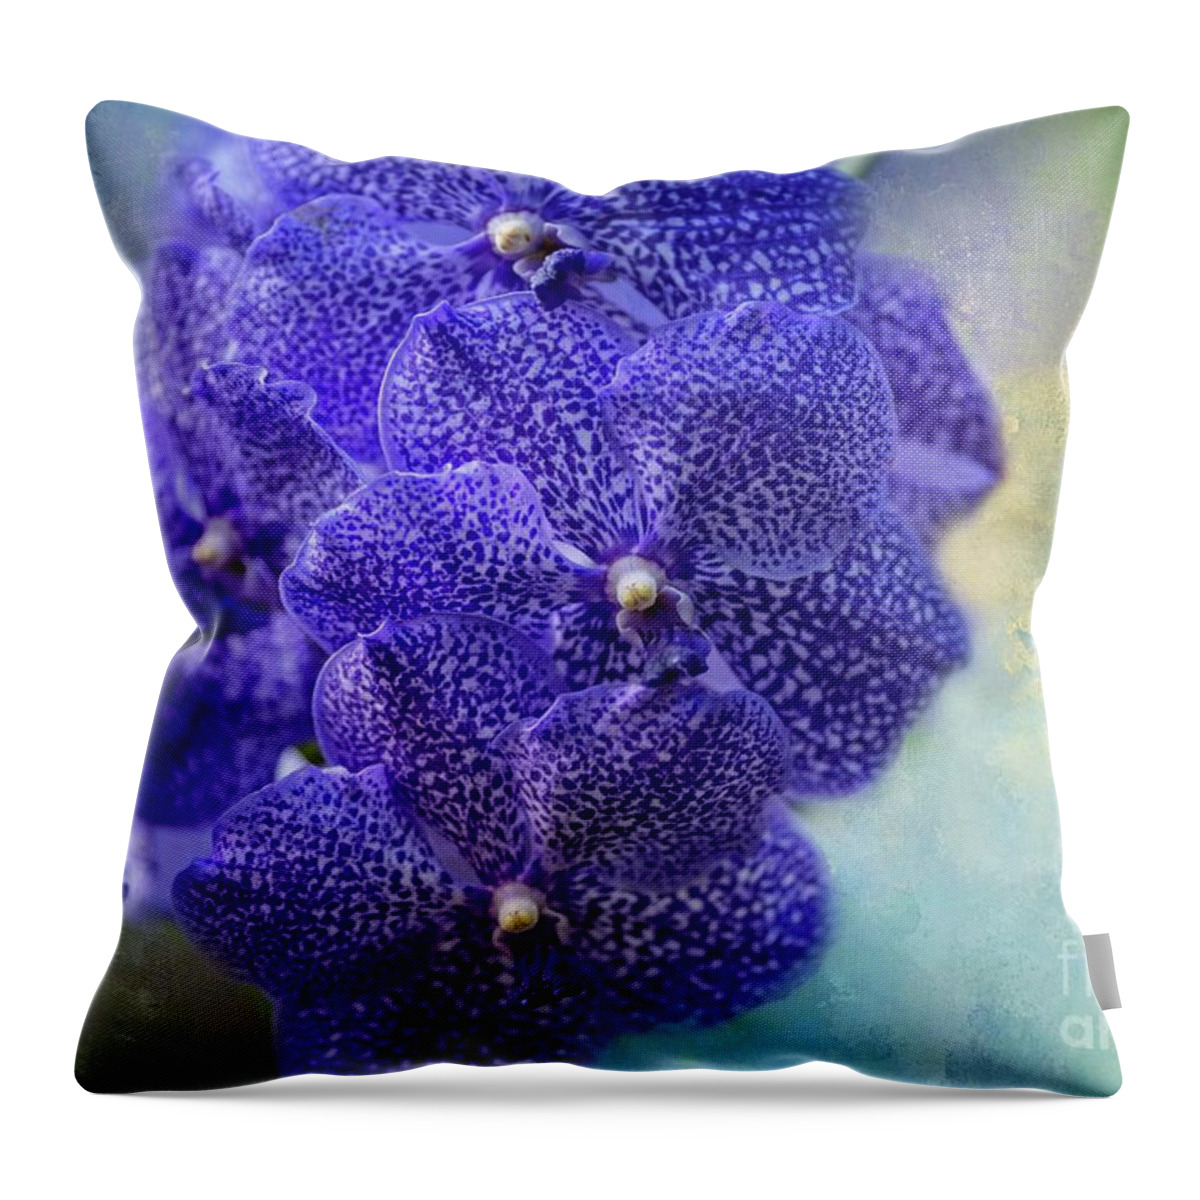 Vanda Throw Pillow featuring the photograph Beautiful Vanda Orchid by Eva Lechner